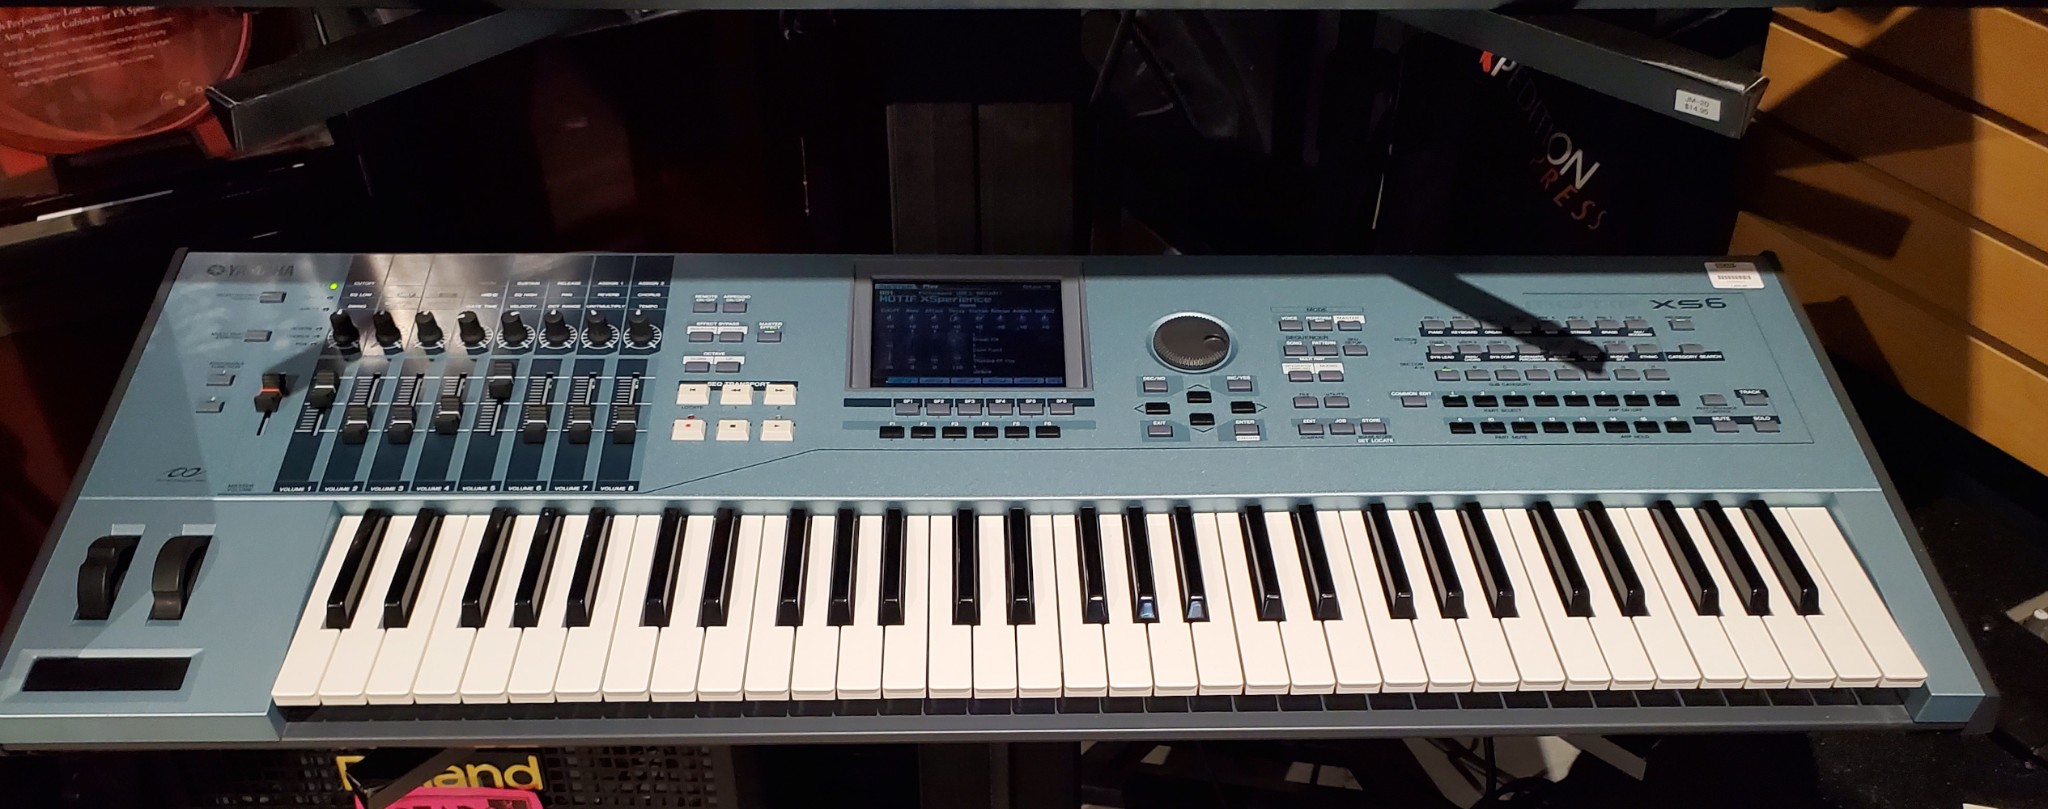 Yamaha MOTIF XS6 Music Synthesizer Workstation